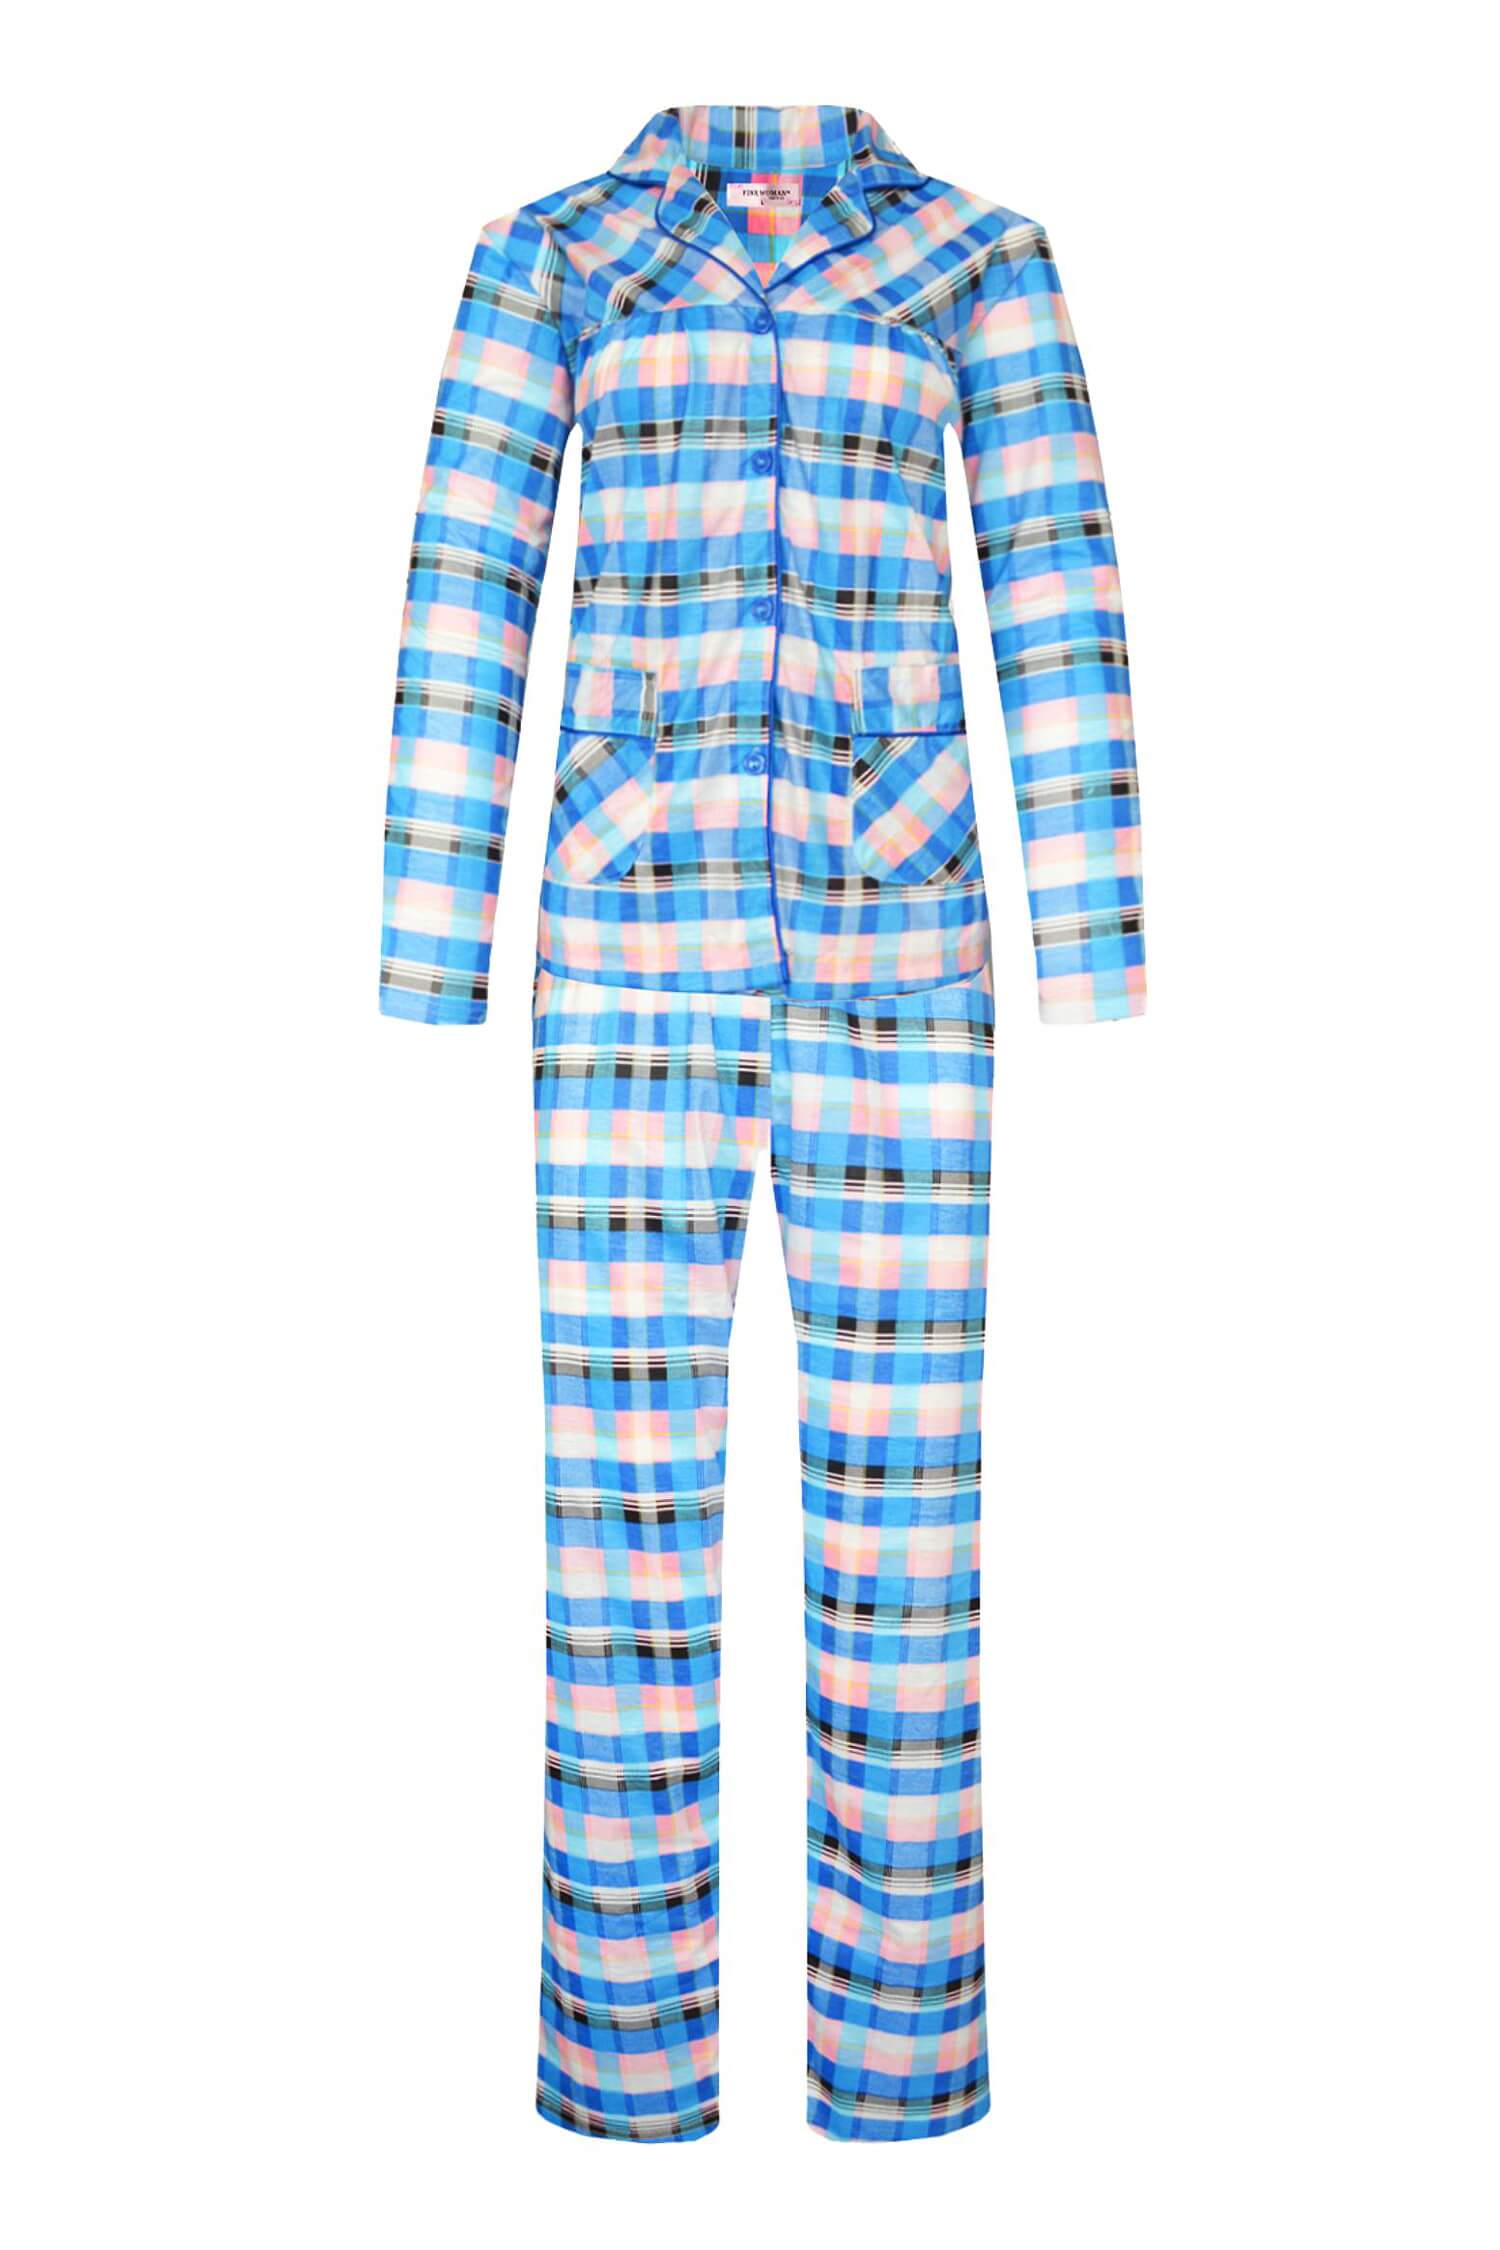 Odeta dámské kostkované pyžamo dlouhé 2271 3XL modrá